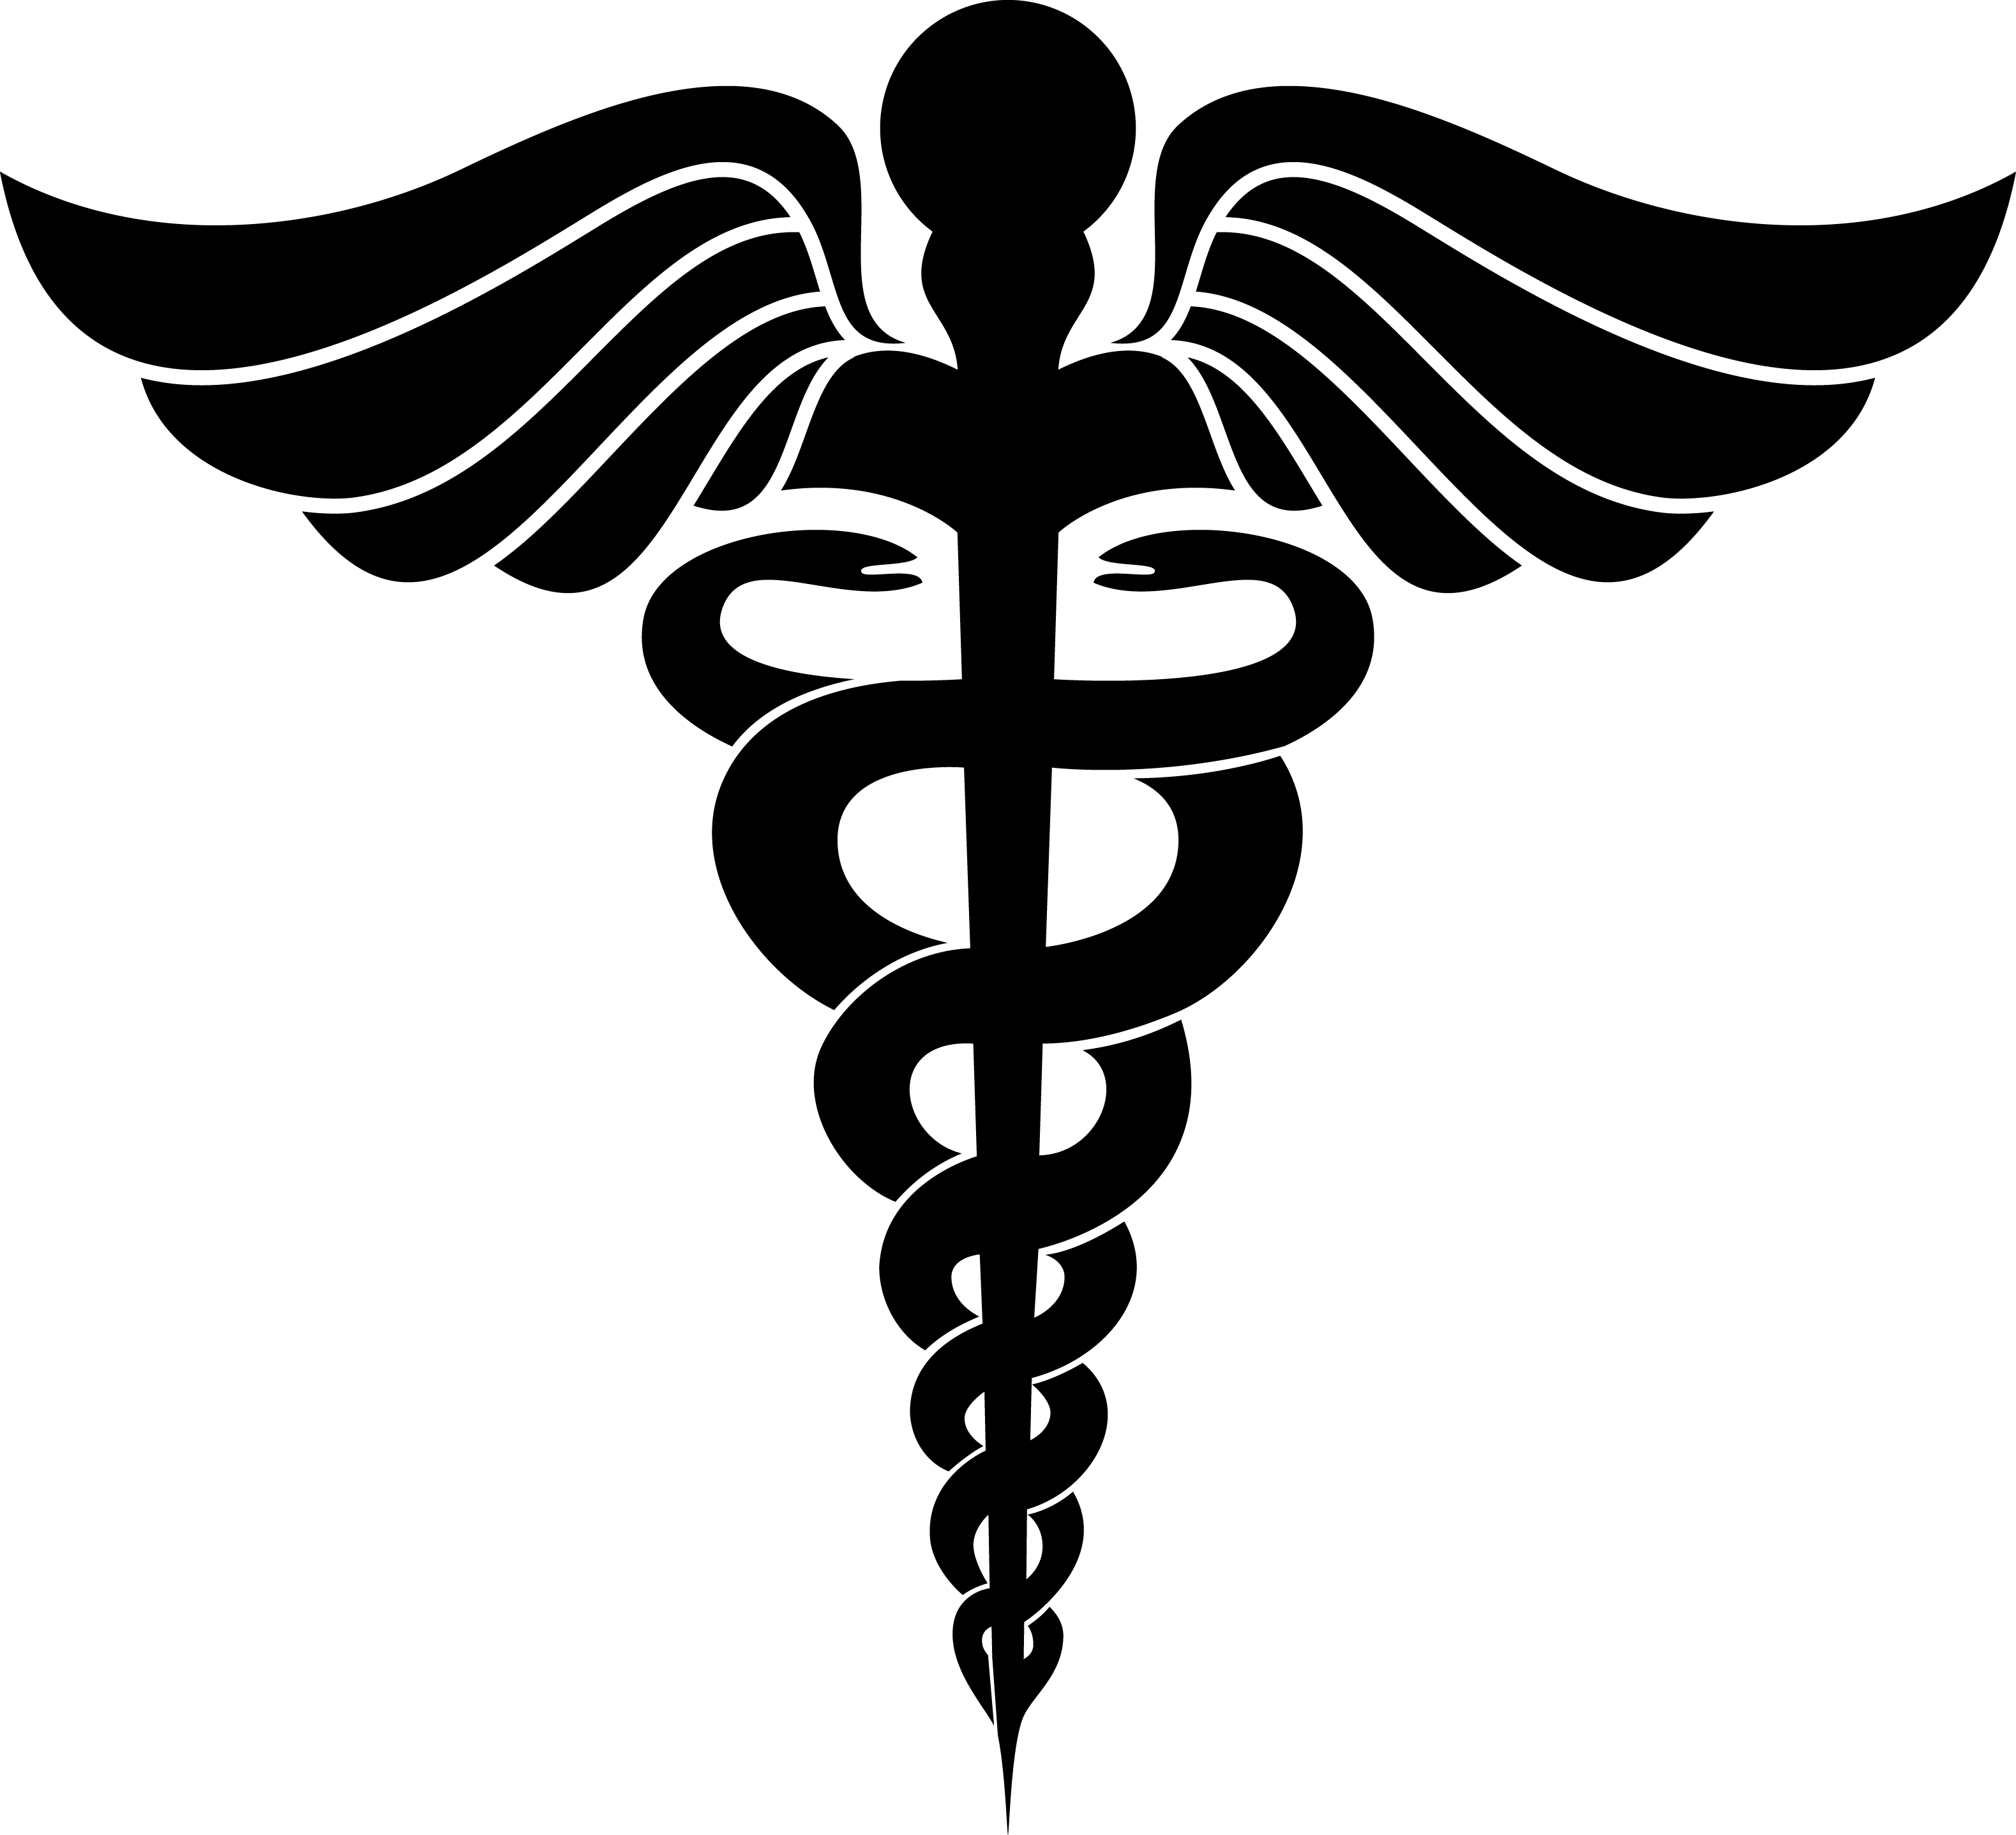 Free Medical Symbol Cliparts, Download Free Medical Symbol Cliparts png ...